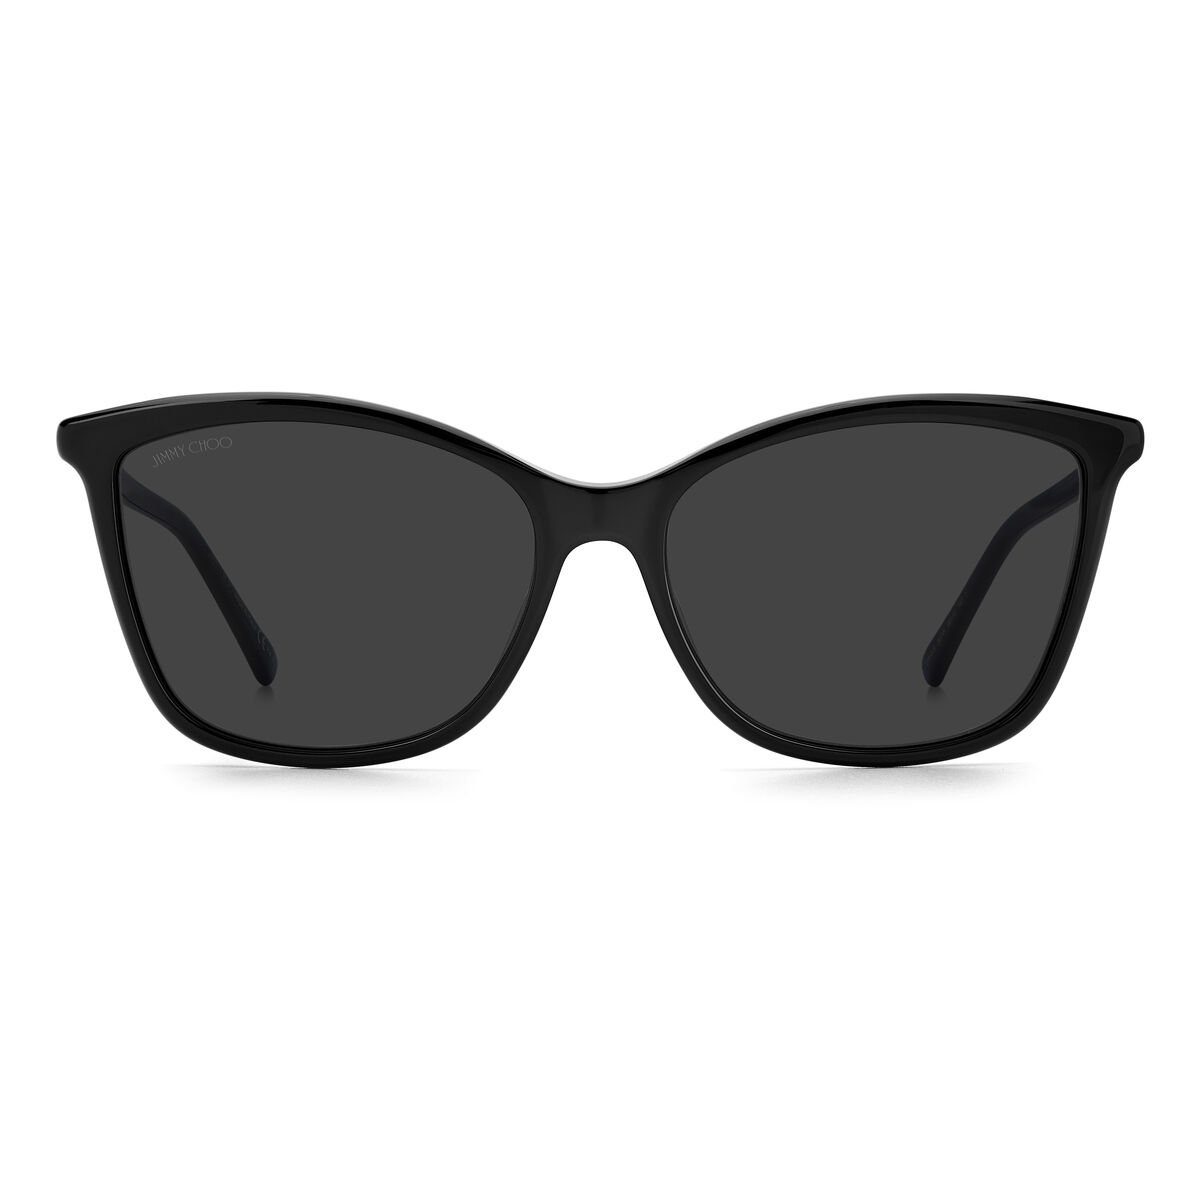 JIMMY CHOO Damensonnenbrille BA-G-S-807-IR Choo Jimmy UV400 Sonnenbrille